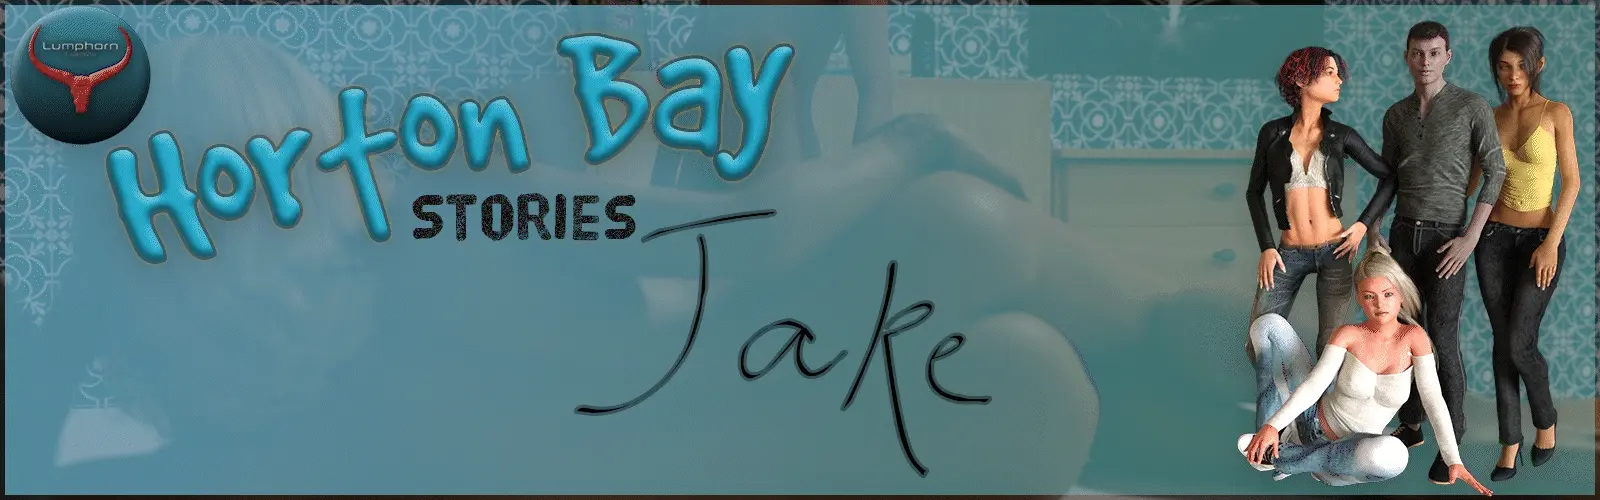 Horton Bay Stories - Jake [v0.1.1] main image